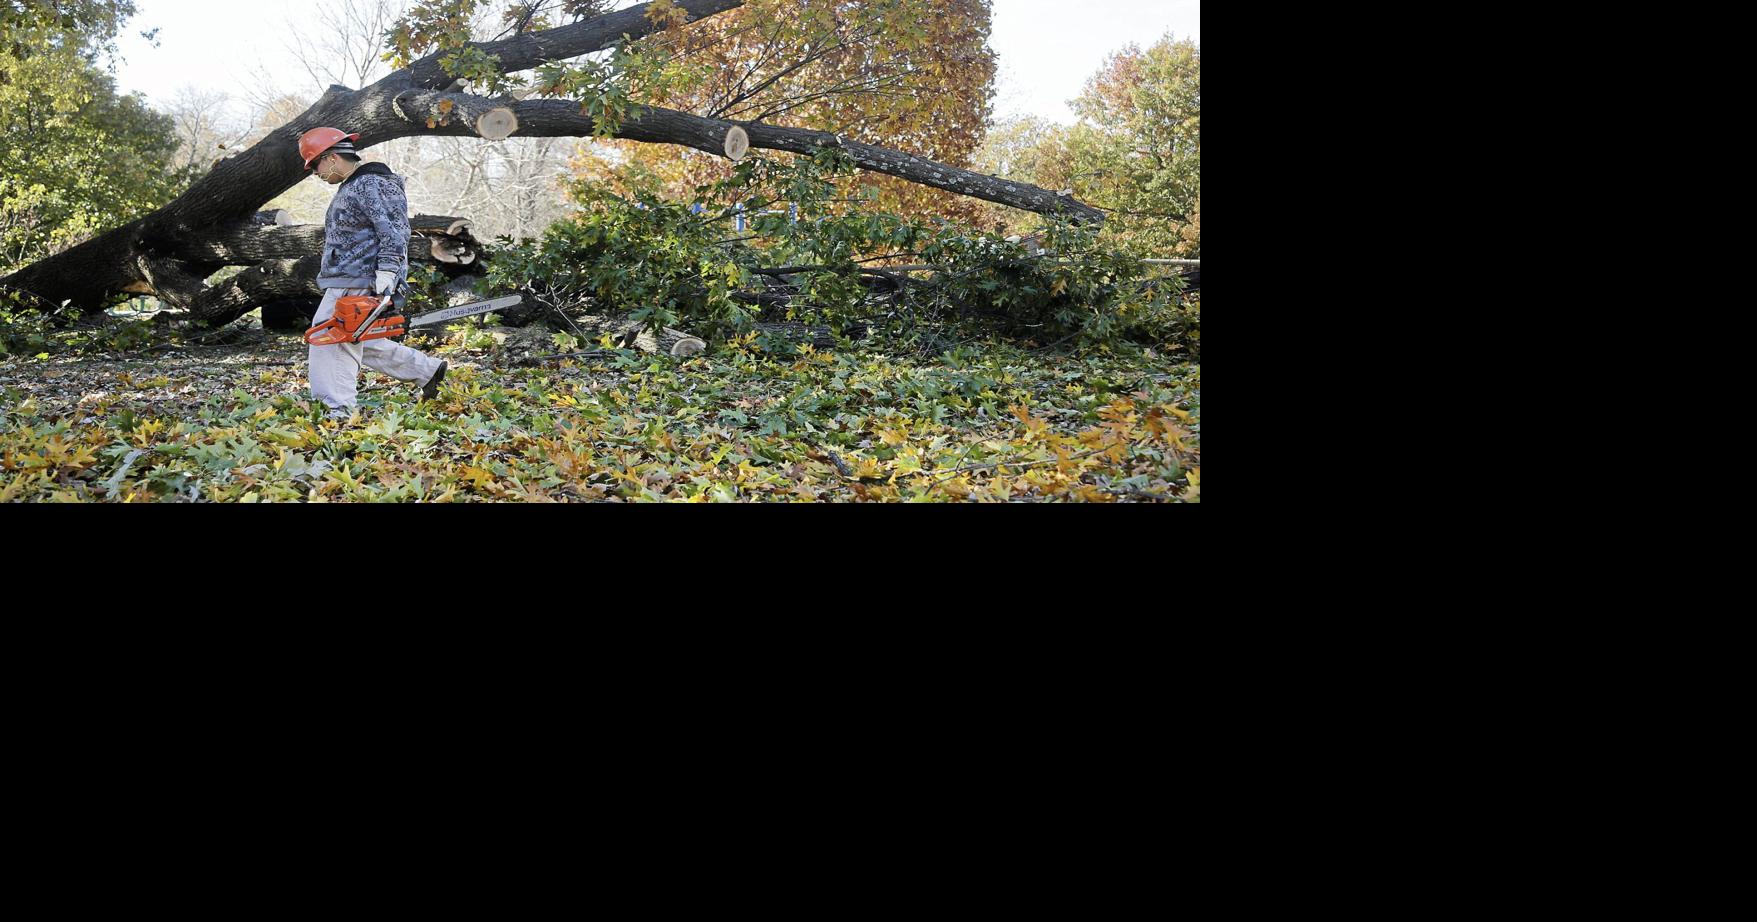 Crews begin removing giant oak tree that collapsed in midtown